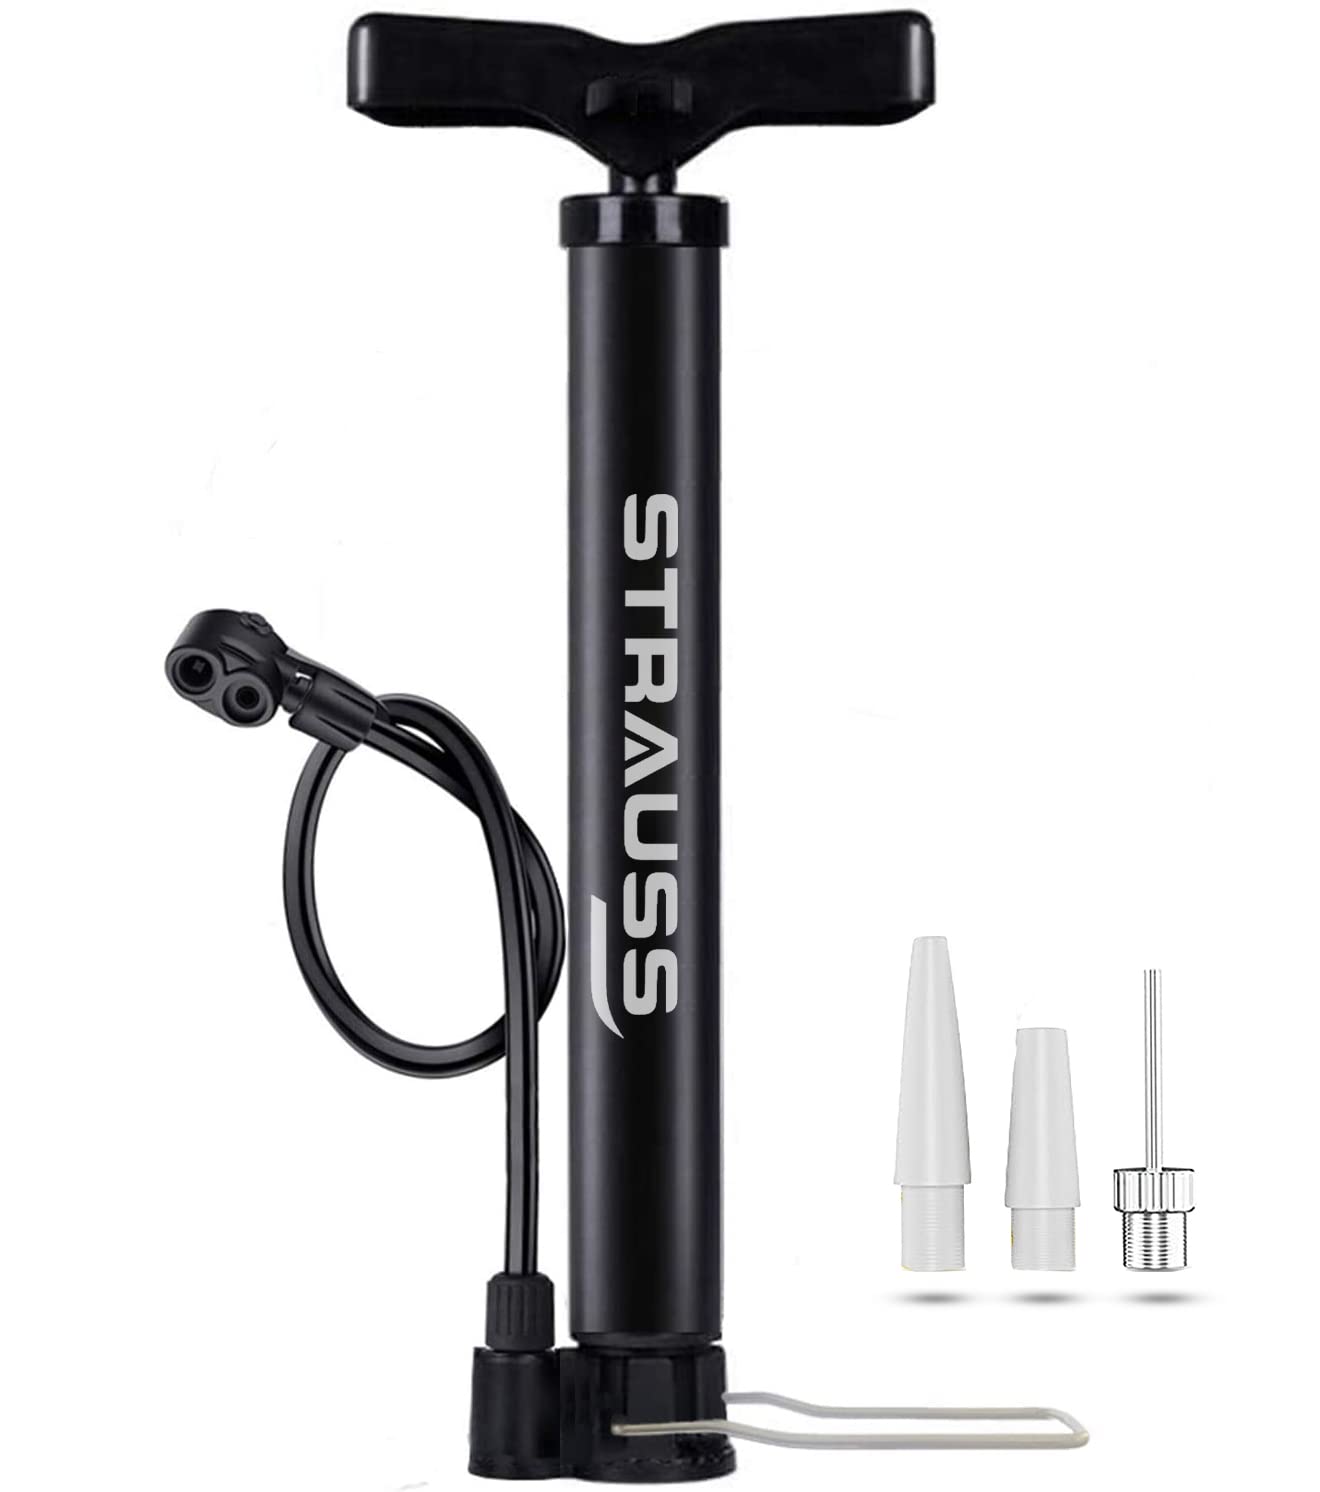 Strauss High Pressure Multipurpose Air Pump | Inflatable Air Pump | Floor Air Pumps for Bicycle, Car, Ball, Motorcycle,(Orange)